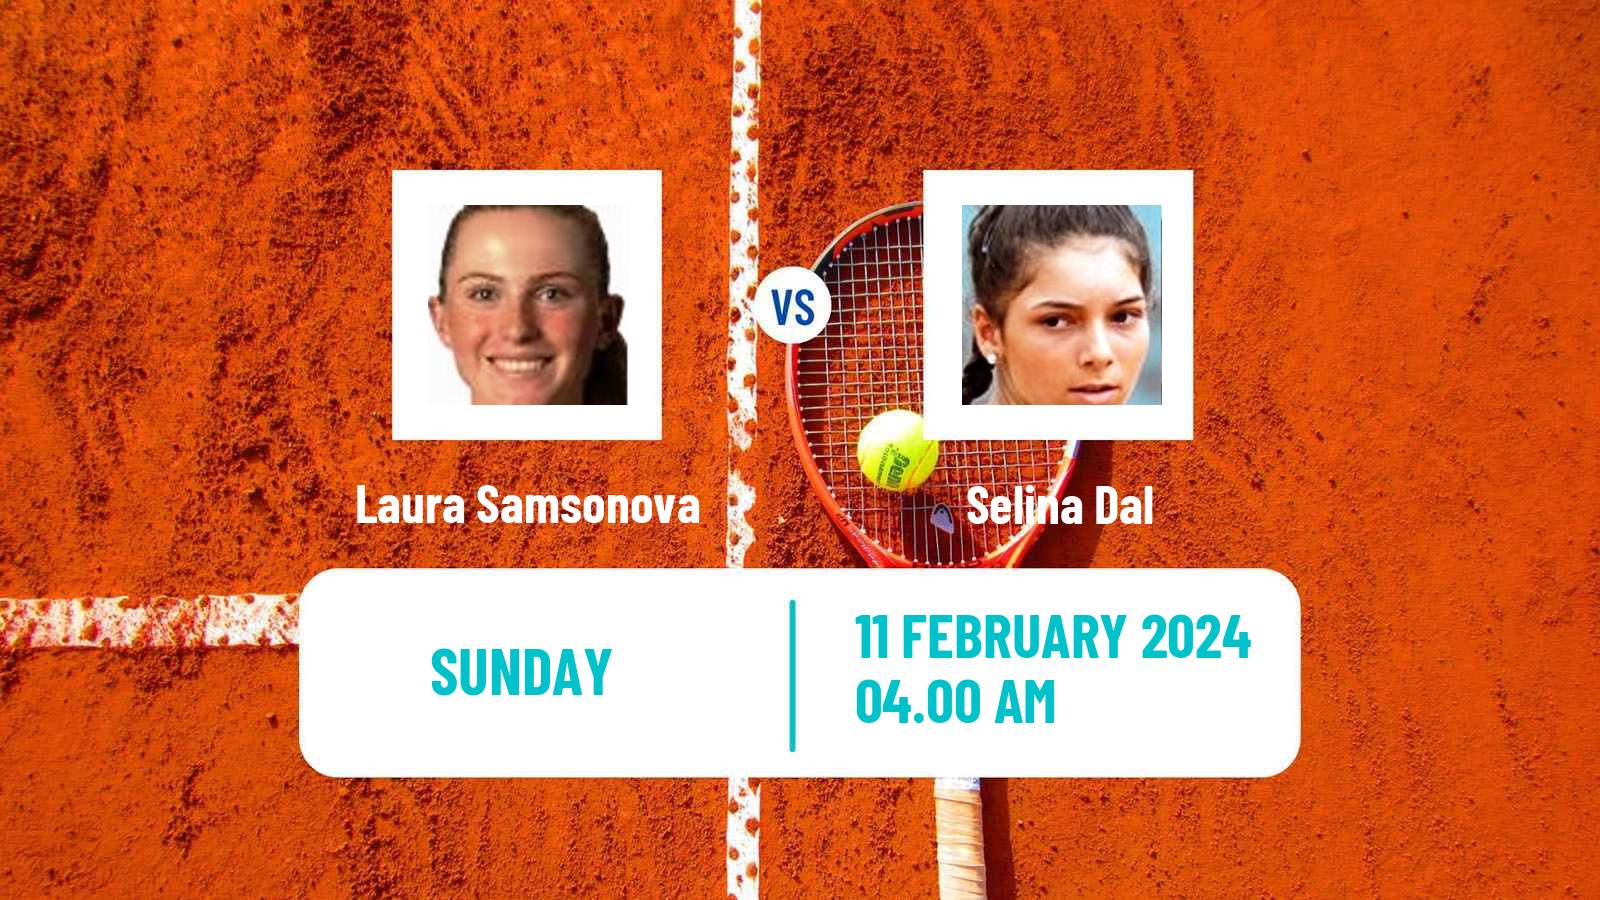 Tennis ITF W15 Monastir 4 Women Laura Samsonova - Selina Dal